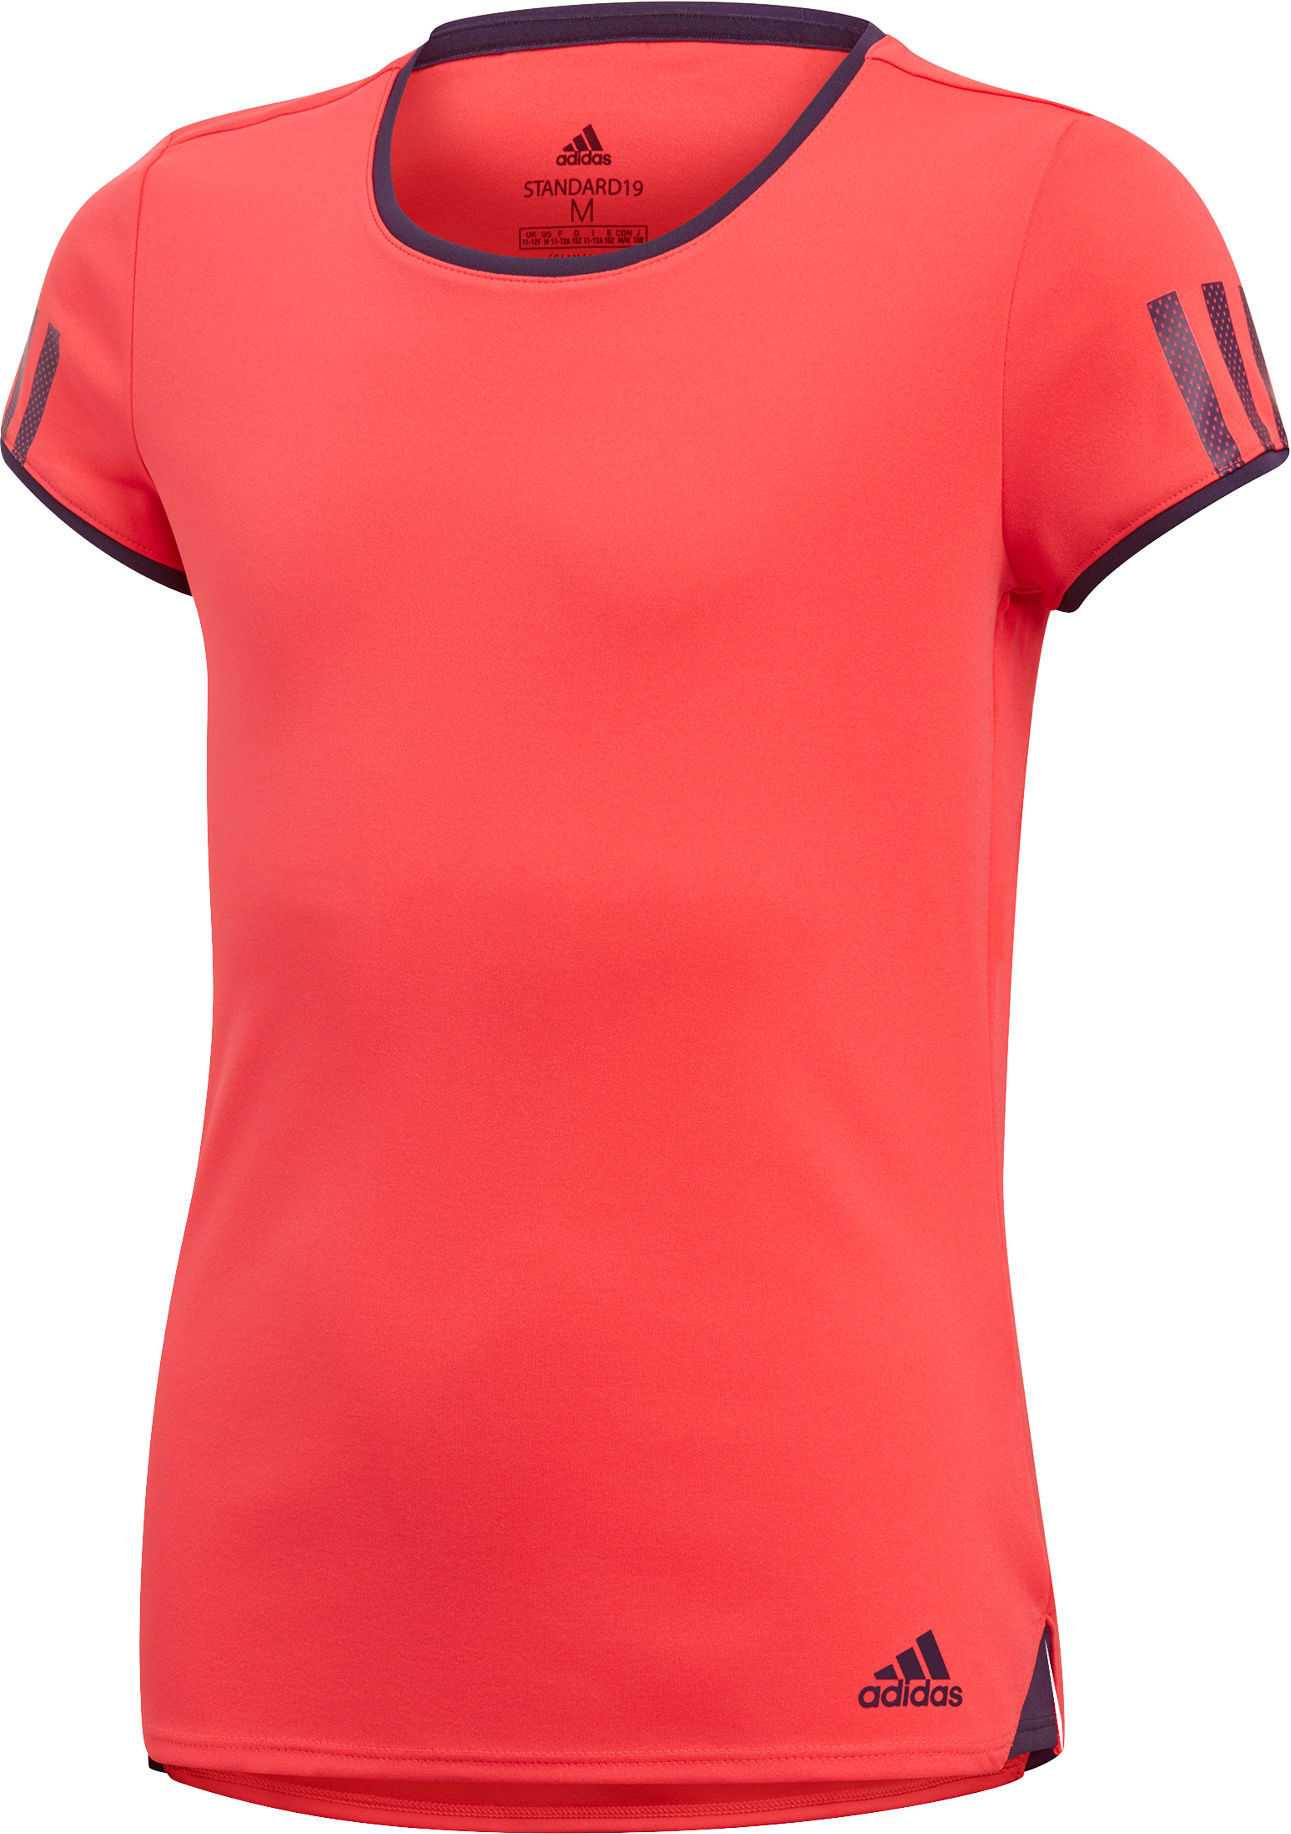 Adidas Girls Club T-shirt Träningströja Coral 152